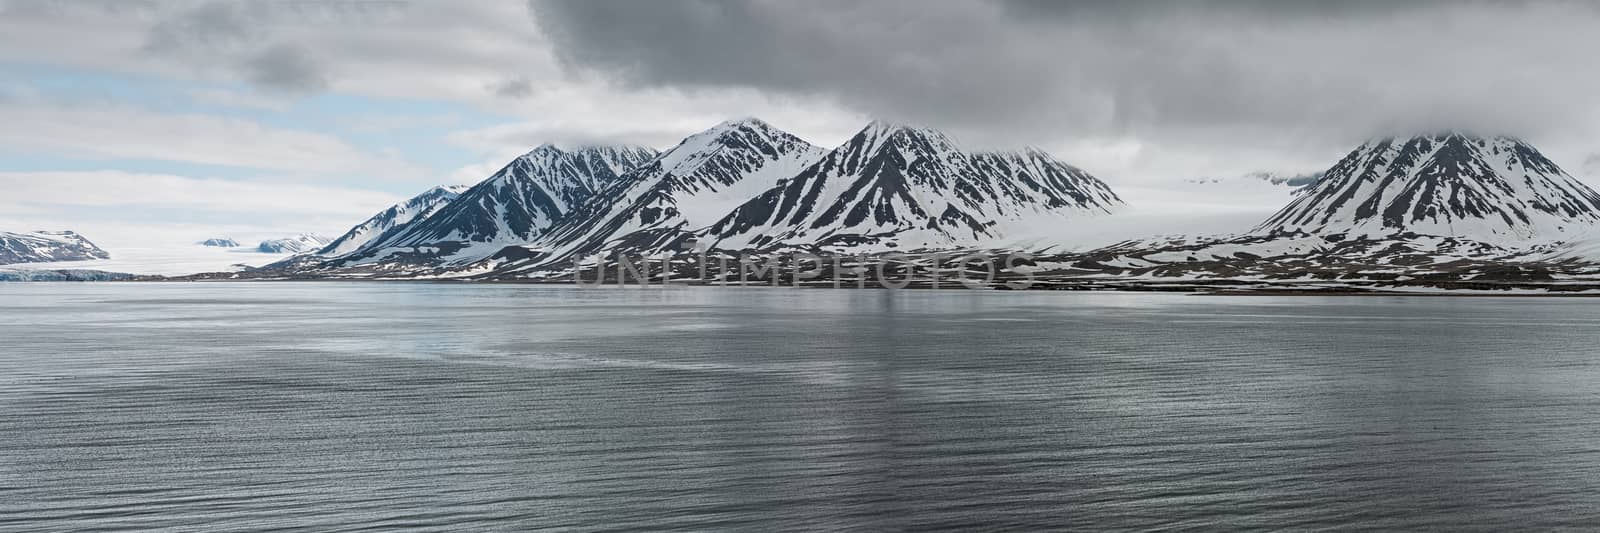 Mountains in Svalbard islands, Norway by LuigiMorbidelli